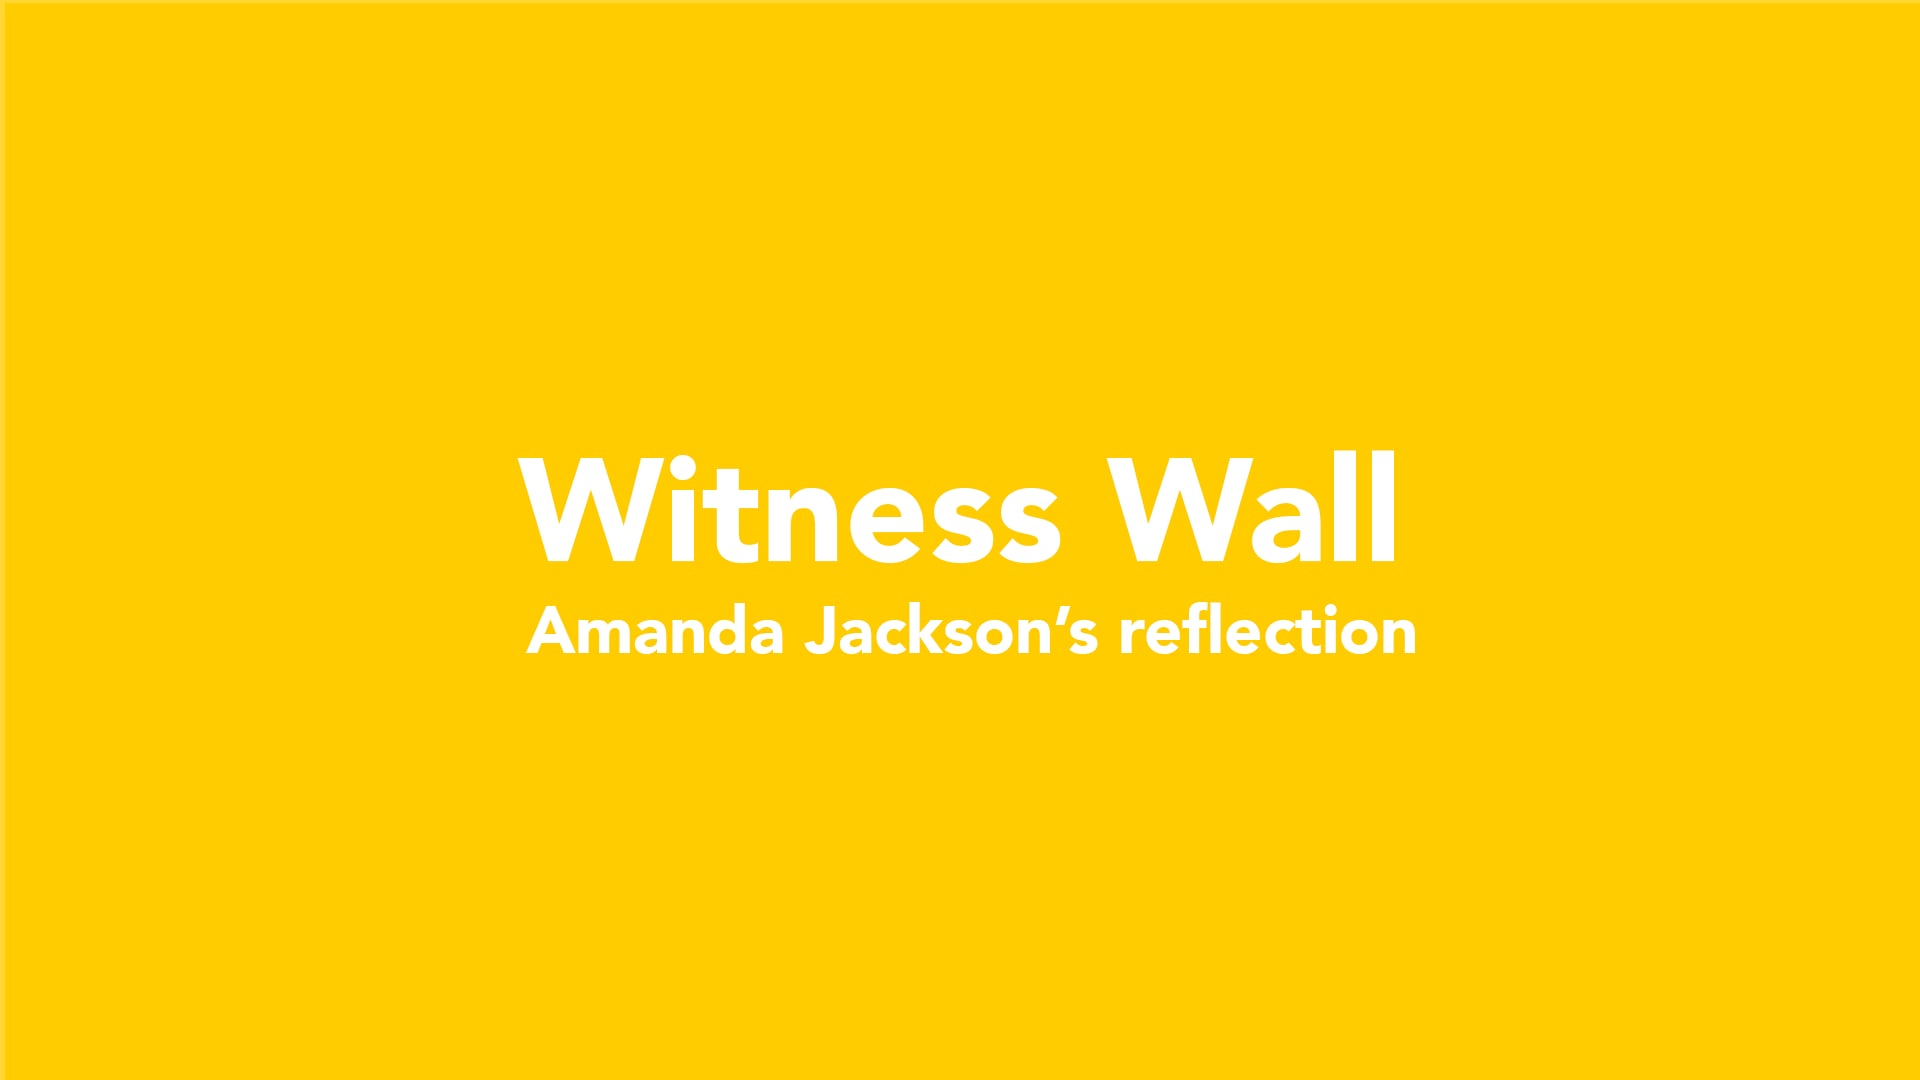 Amanda Jackson's Witness Wall Reflection